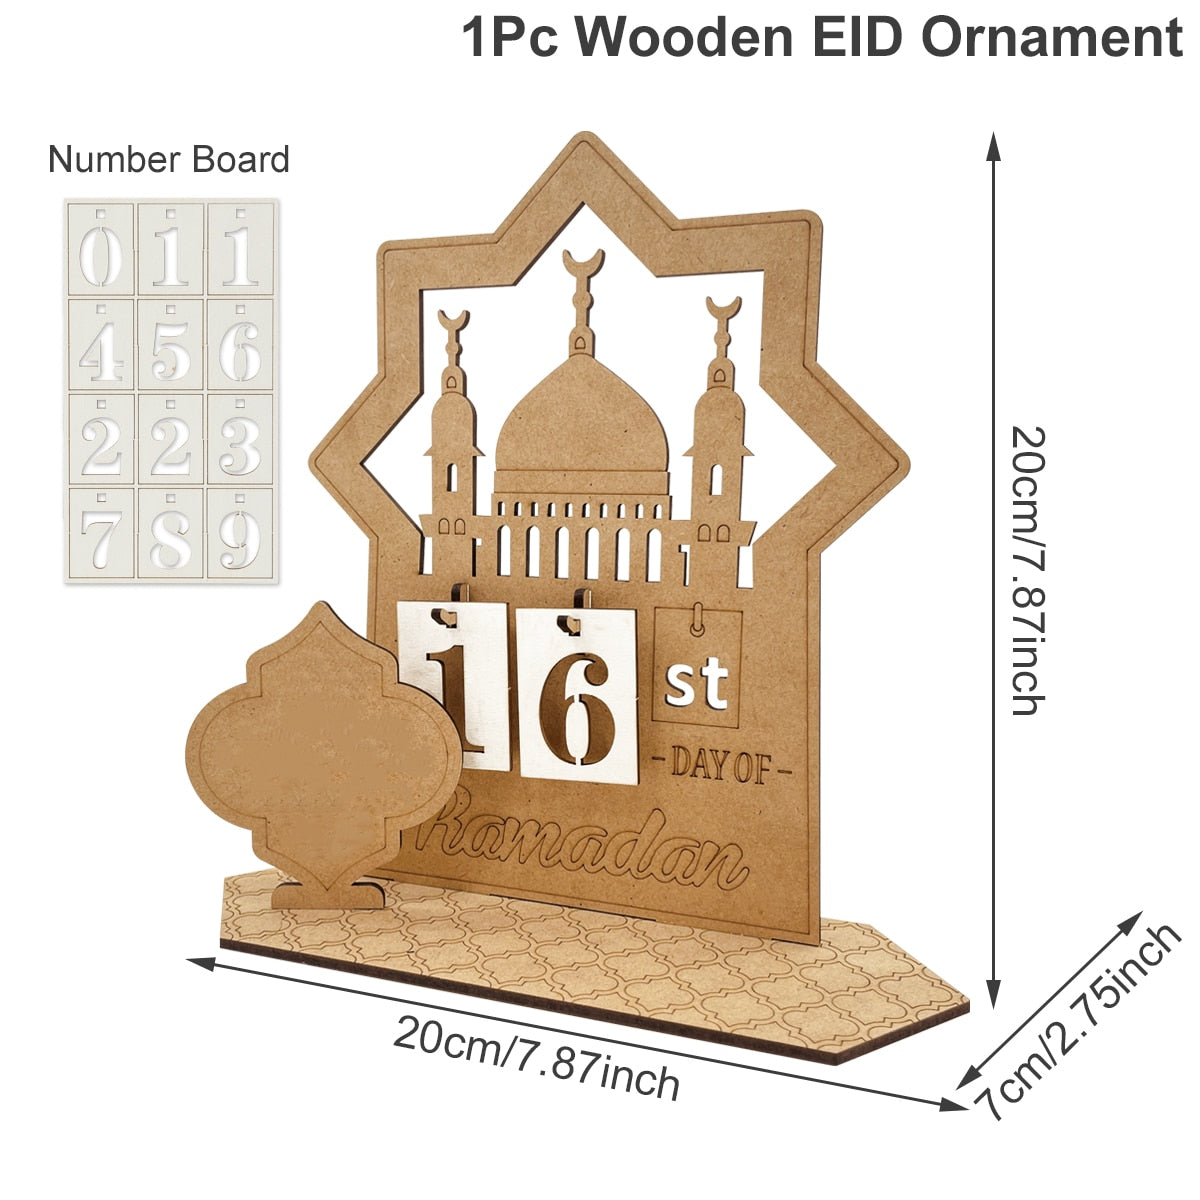 Ramadan Countdown Calendar Wooden Ornament